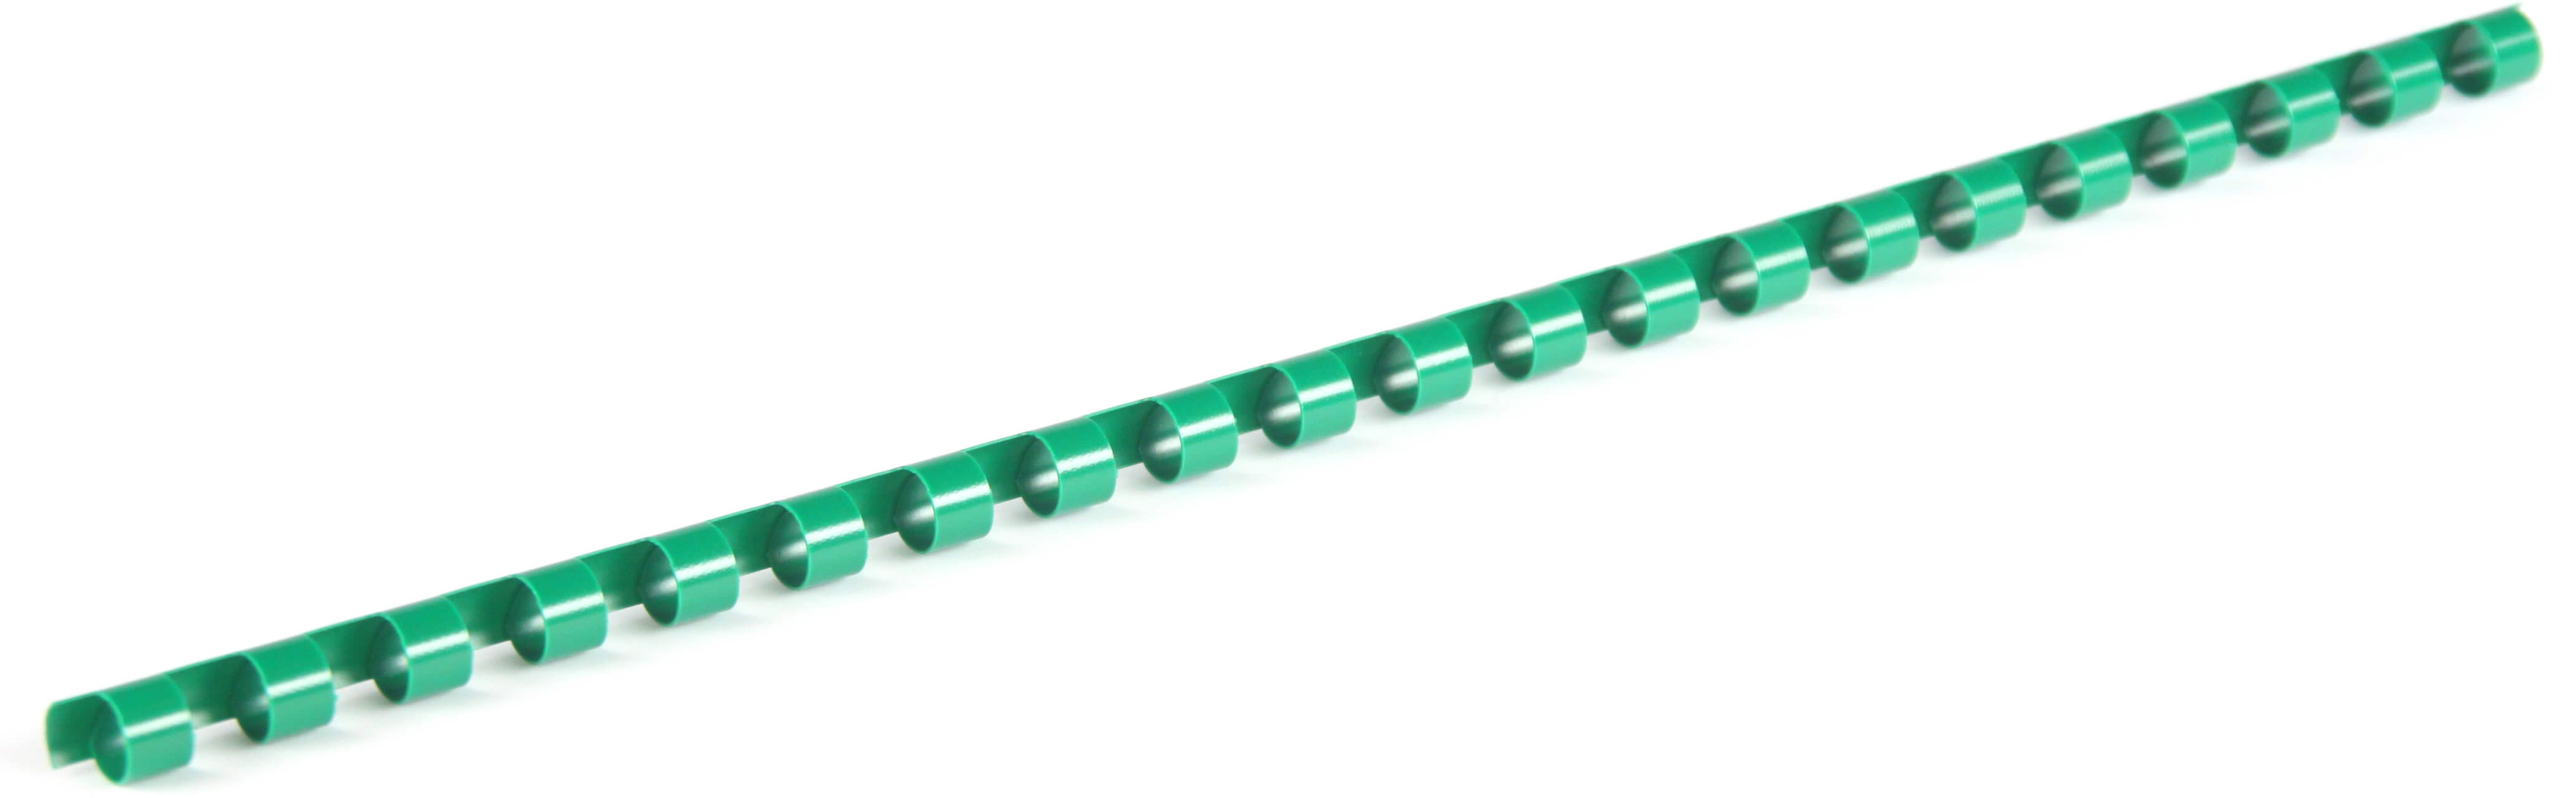 Plastikbinderücken 21 Ringe 6mm grün (100 Stück)